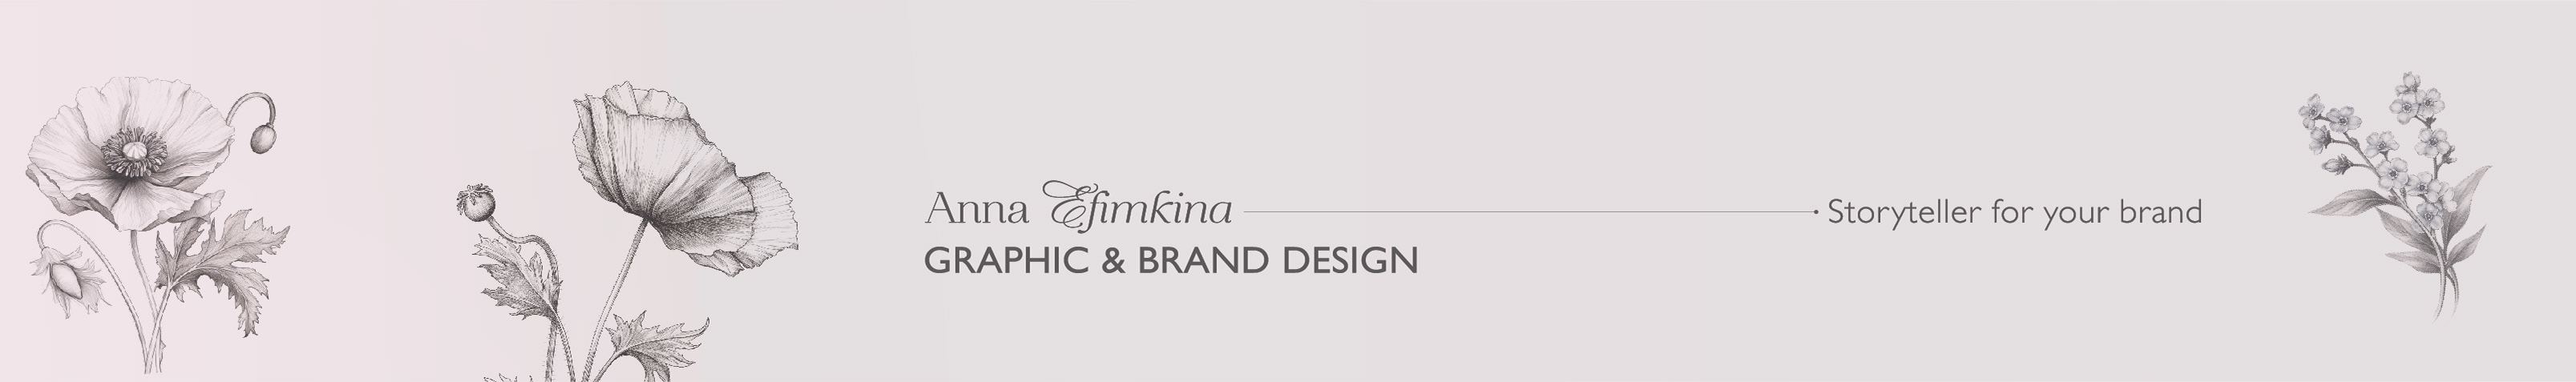 Anna Efimkina's profile banner